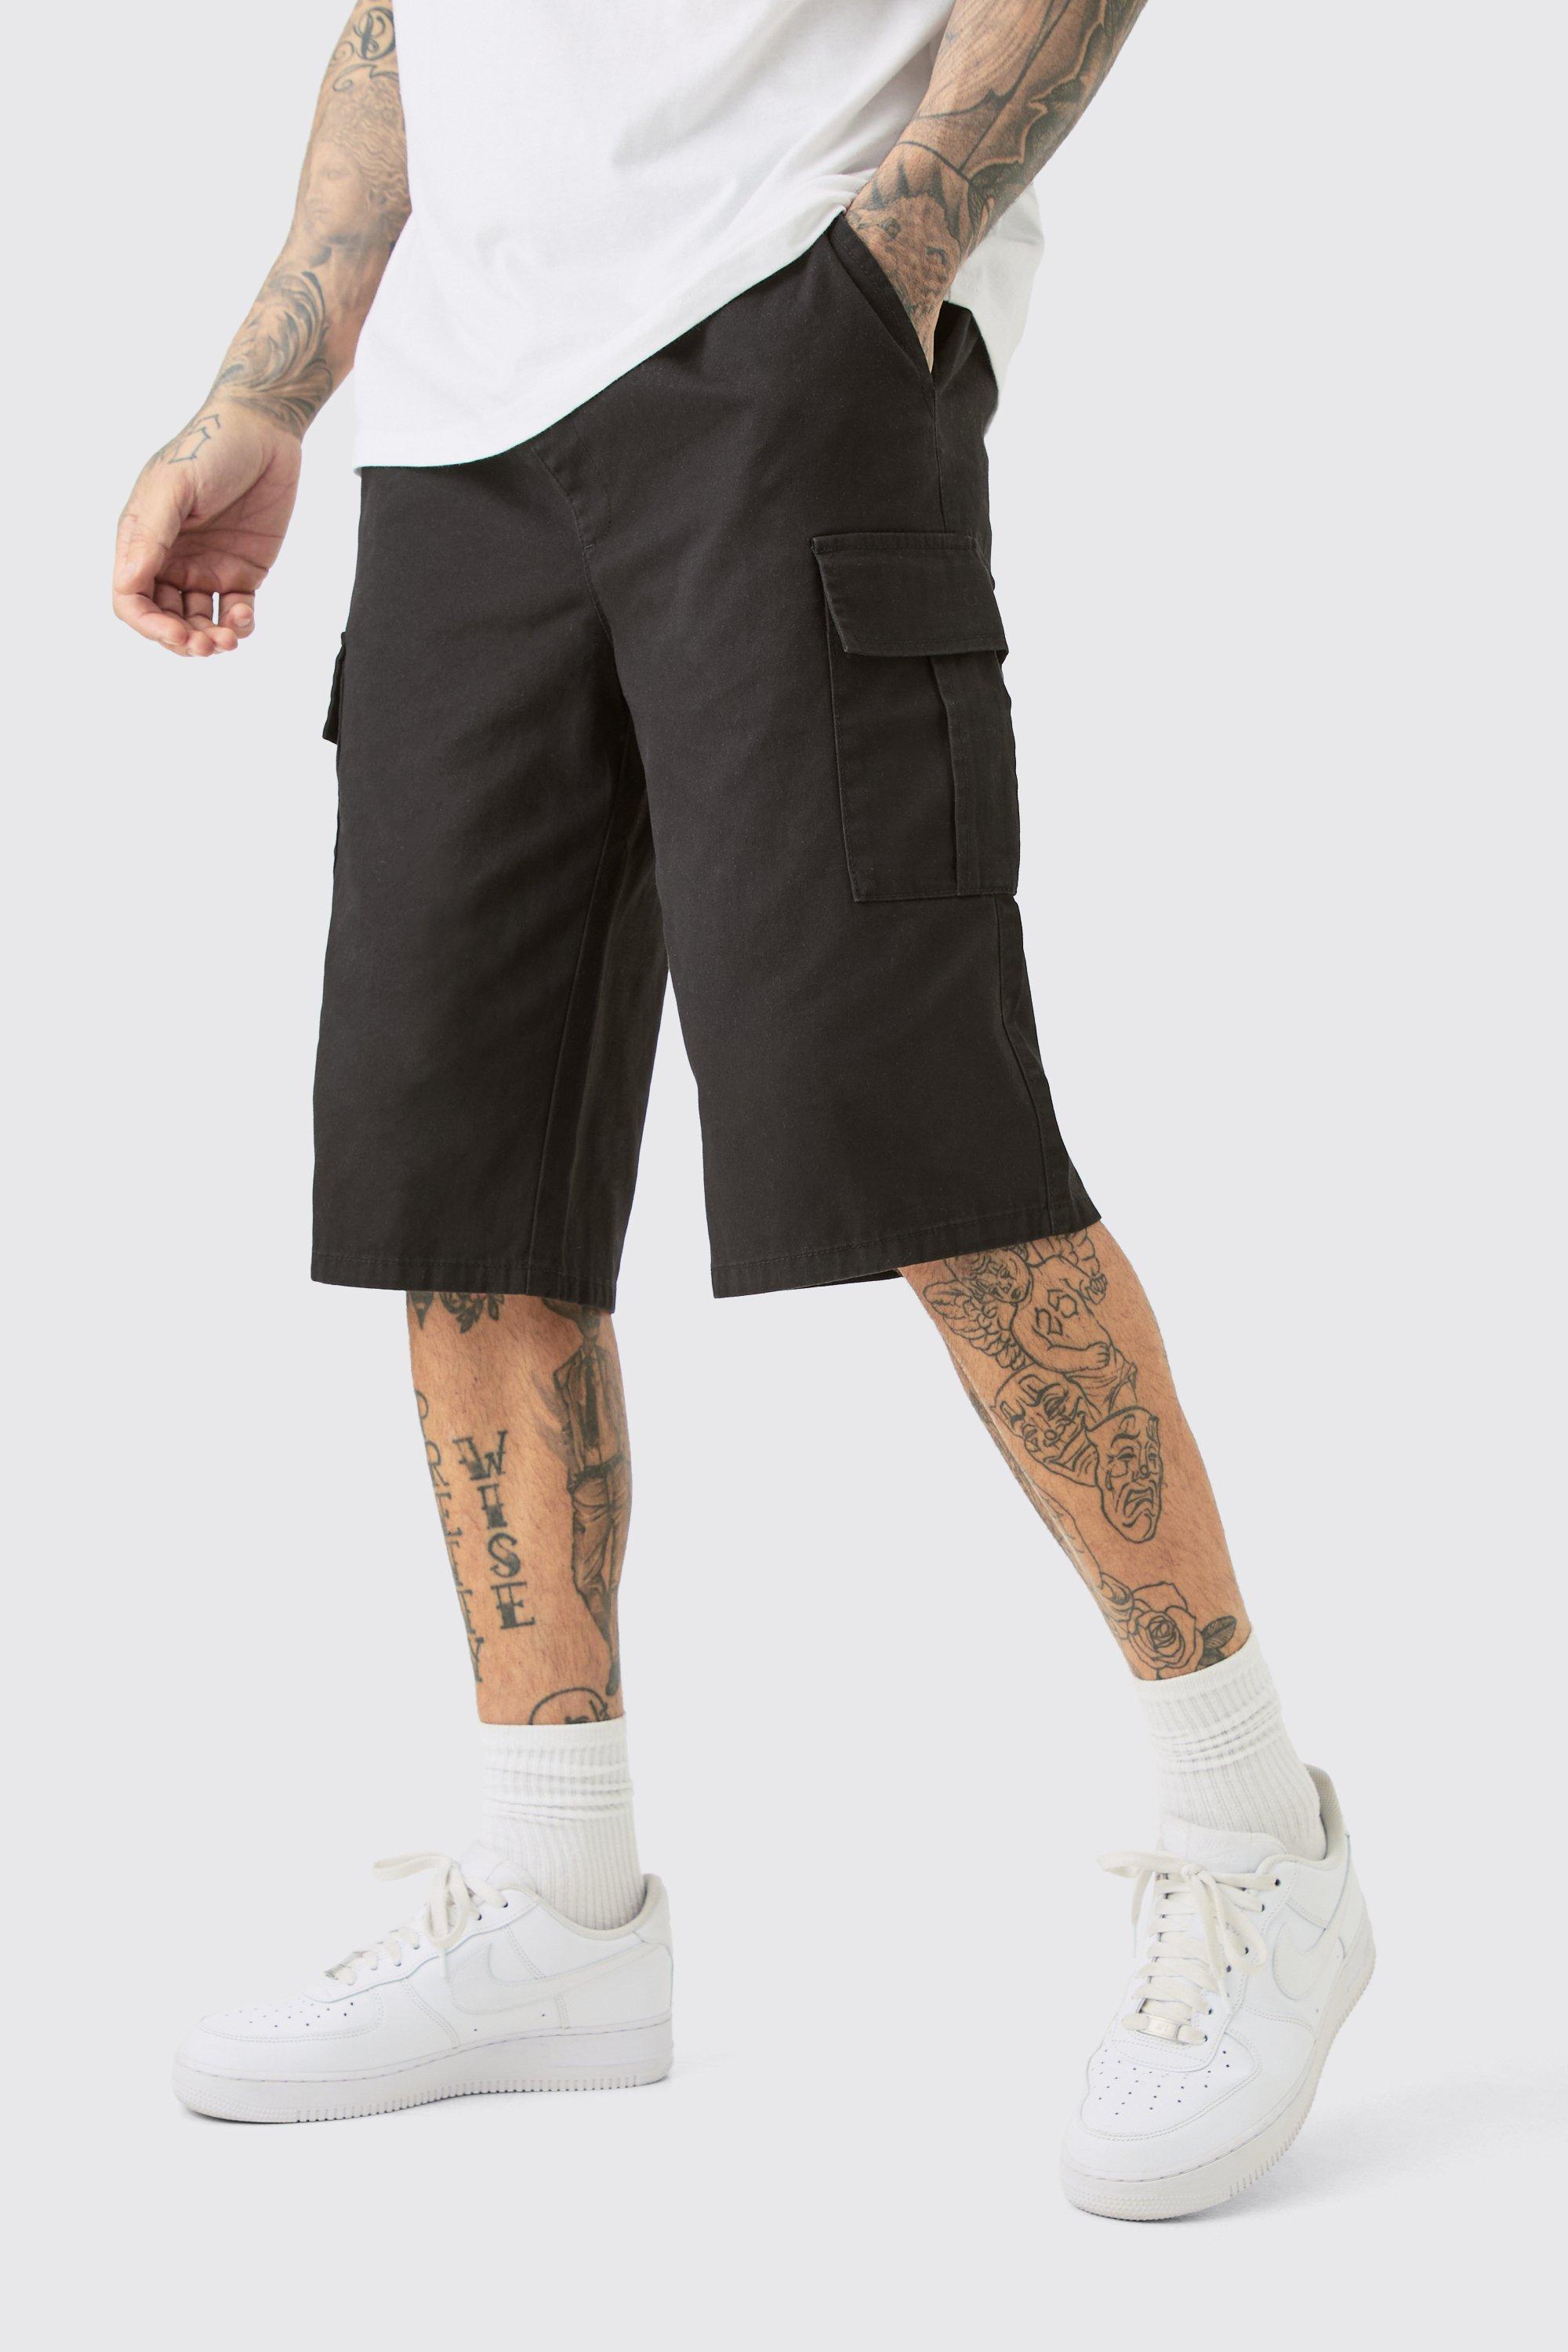 Image of Tall Elastic Waist Black Relaxed Fit Longer Length Cargo Shorts, Nero